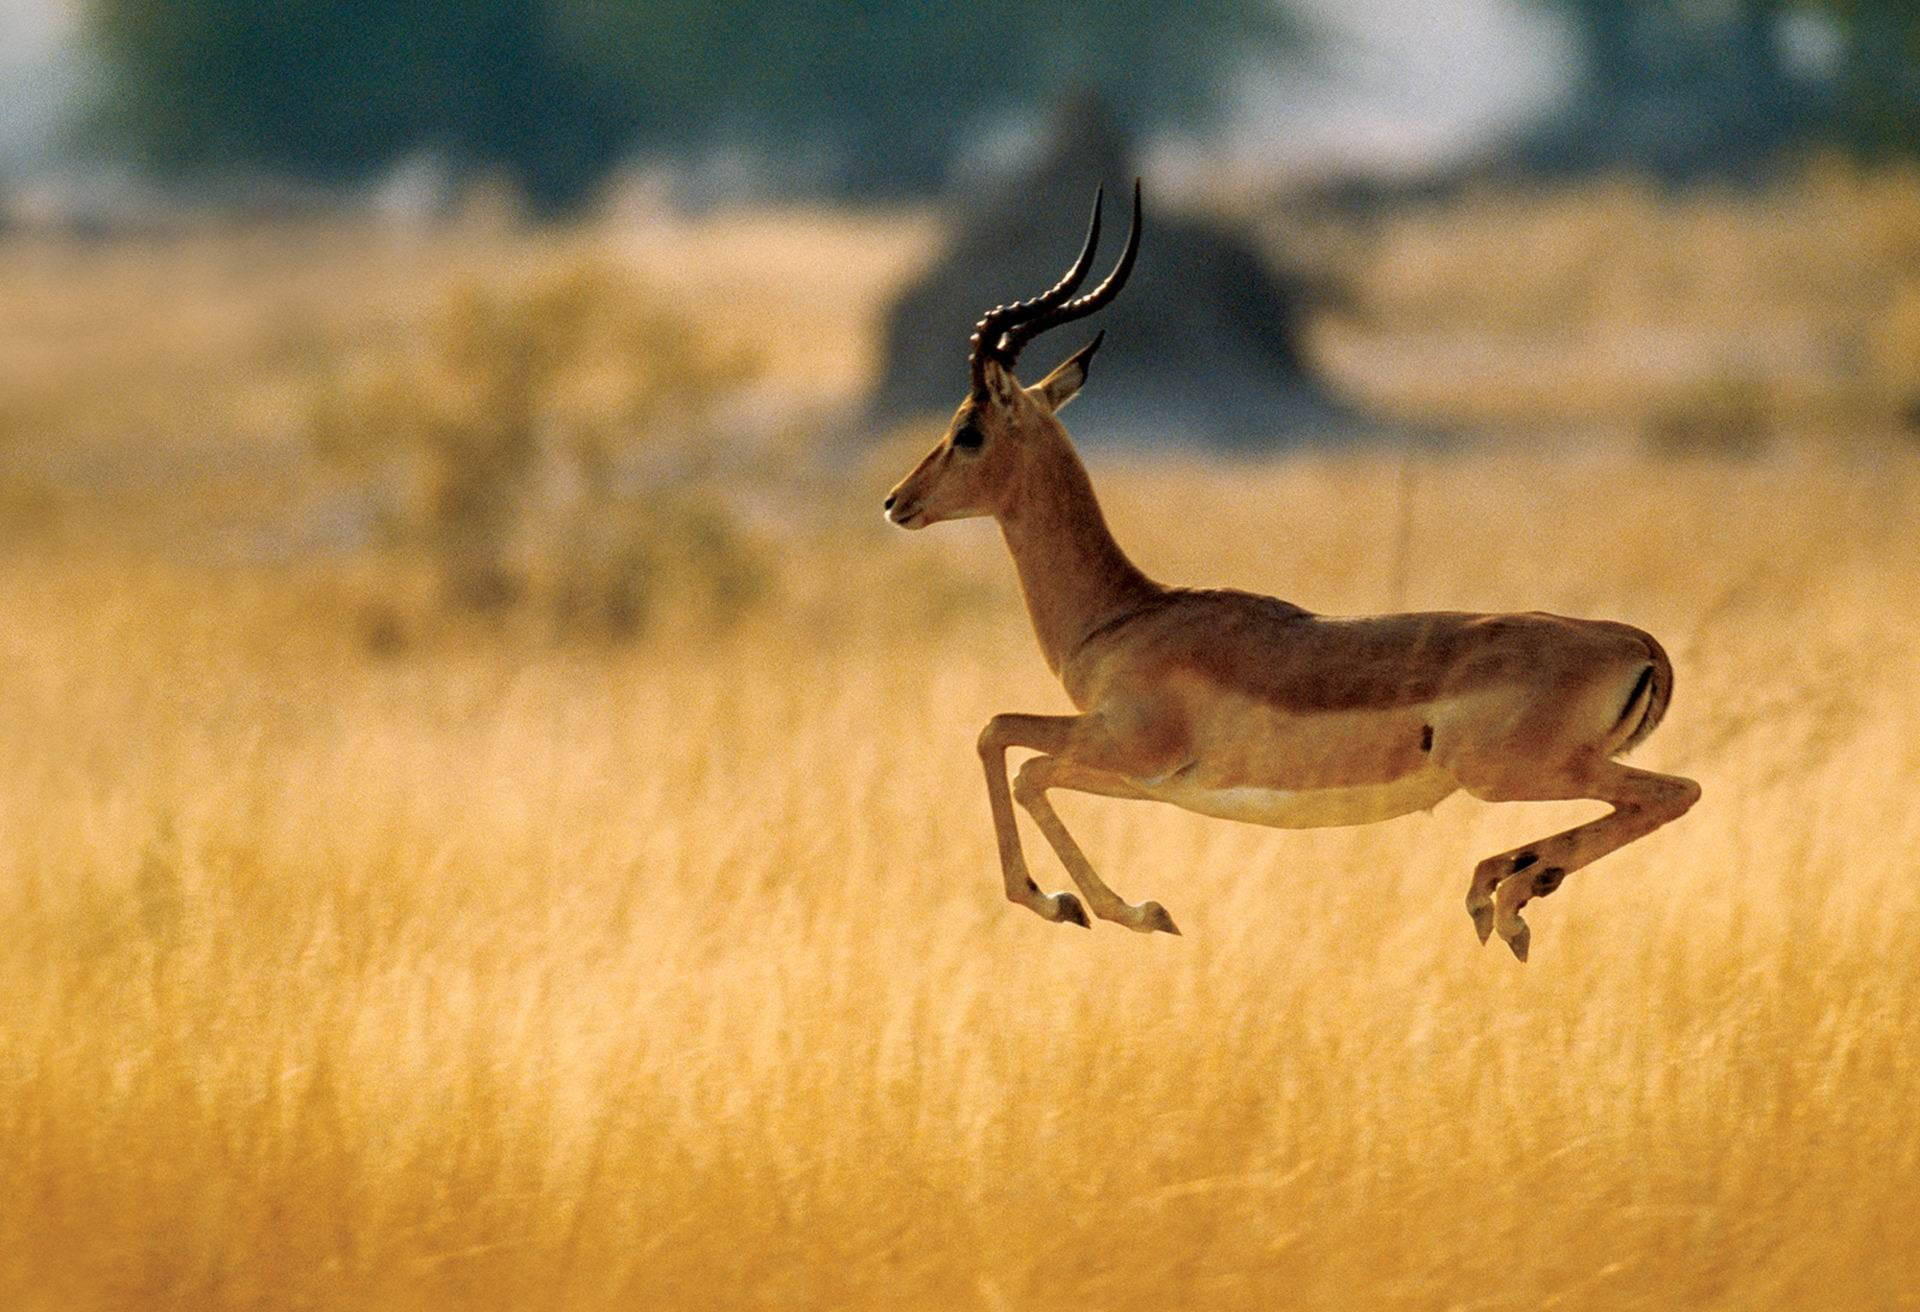 Caption: Majestic Antelope Leap In Botswana